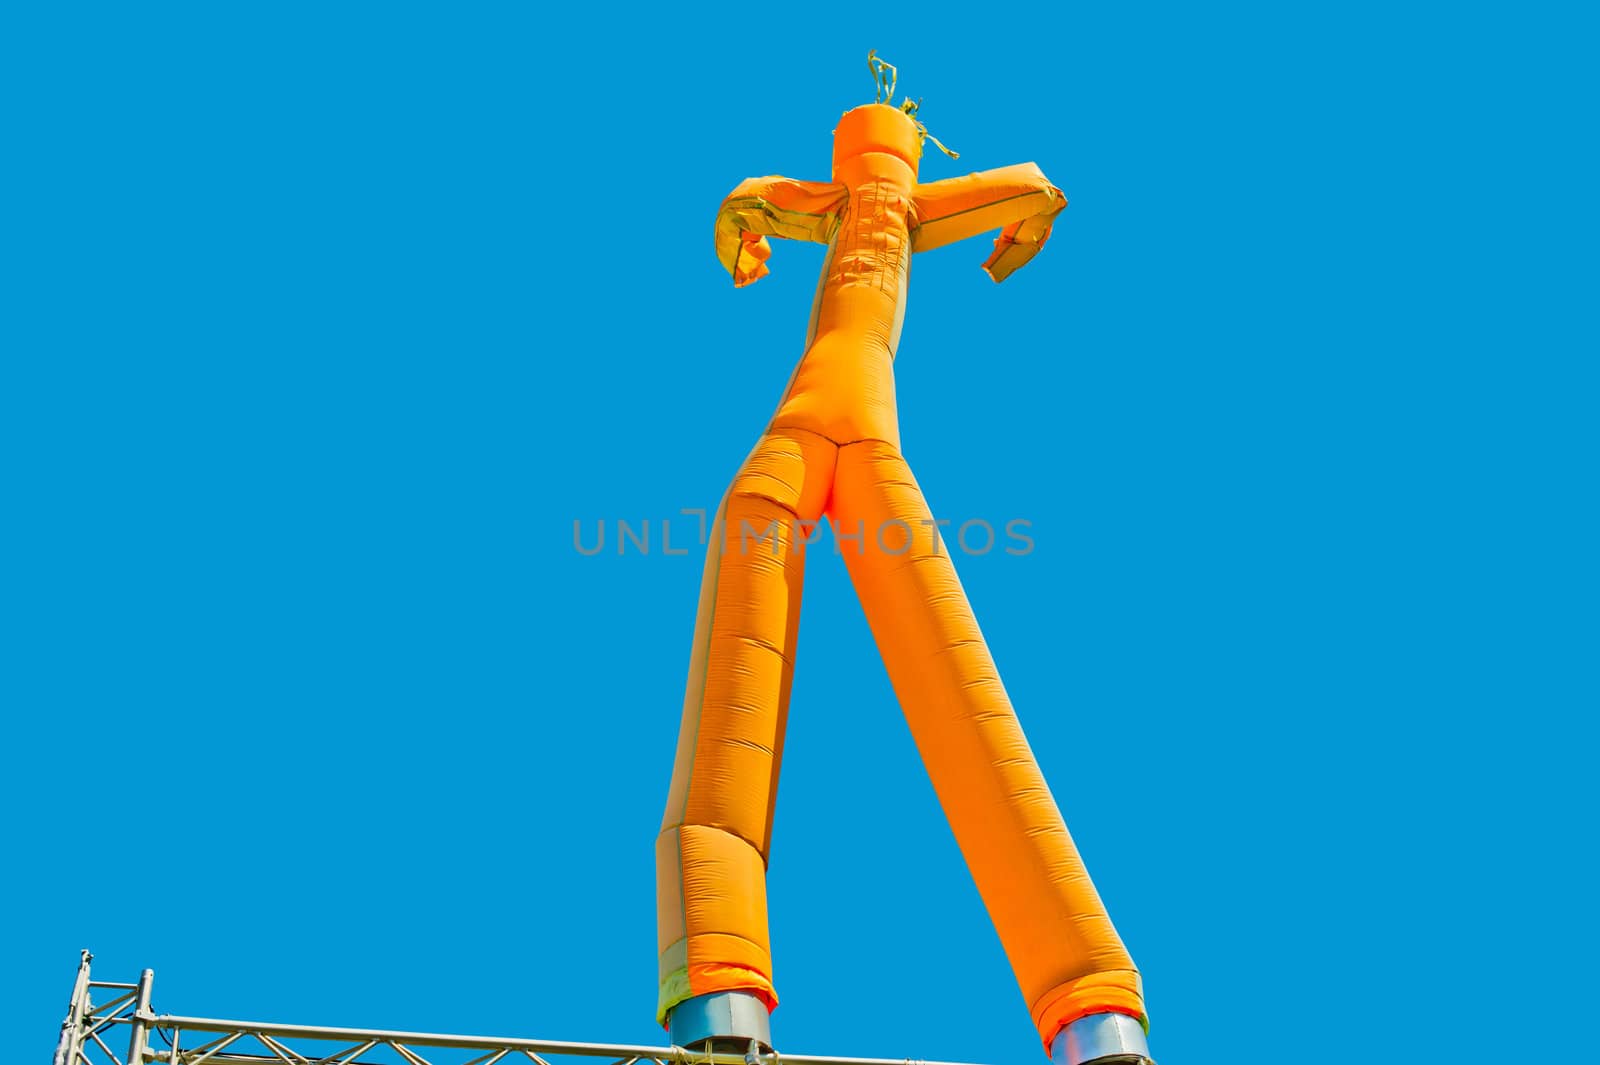 Inflatable man by photoroman